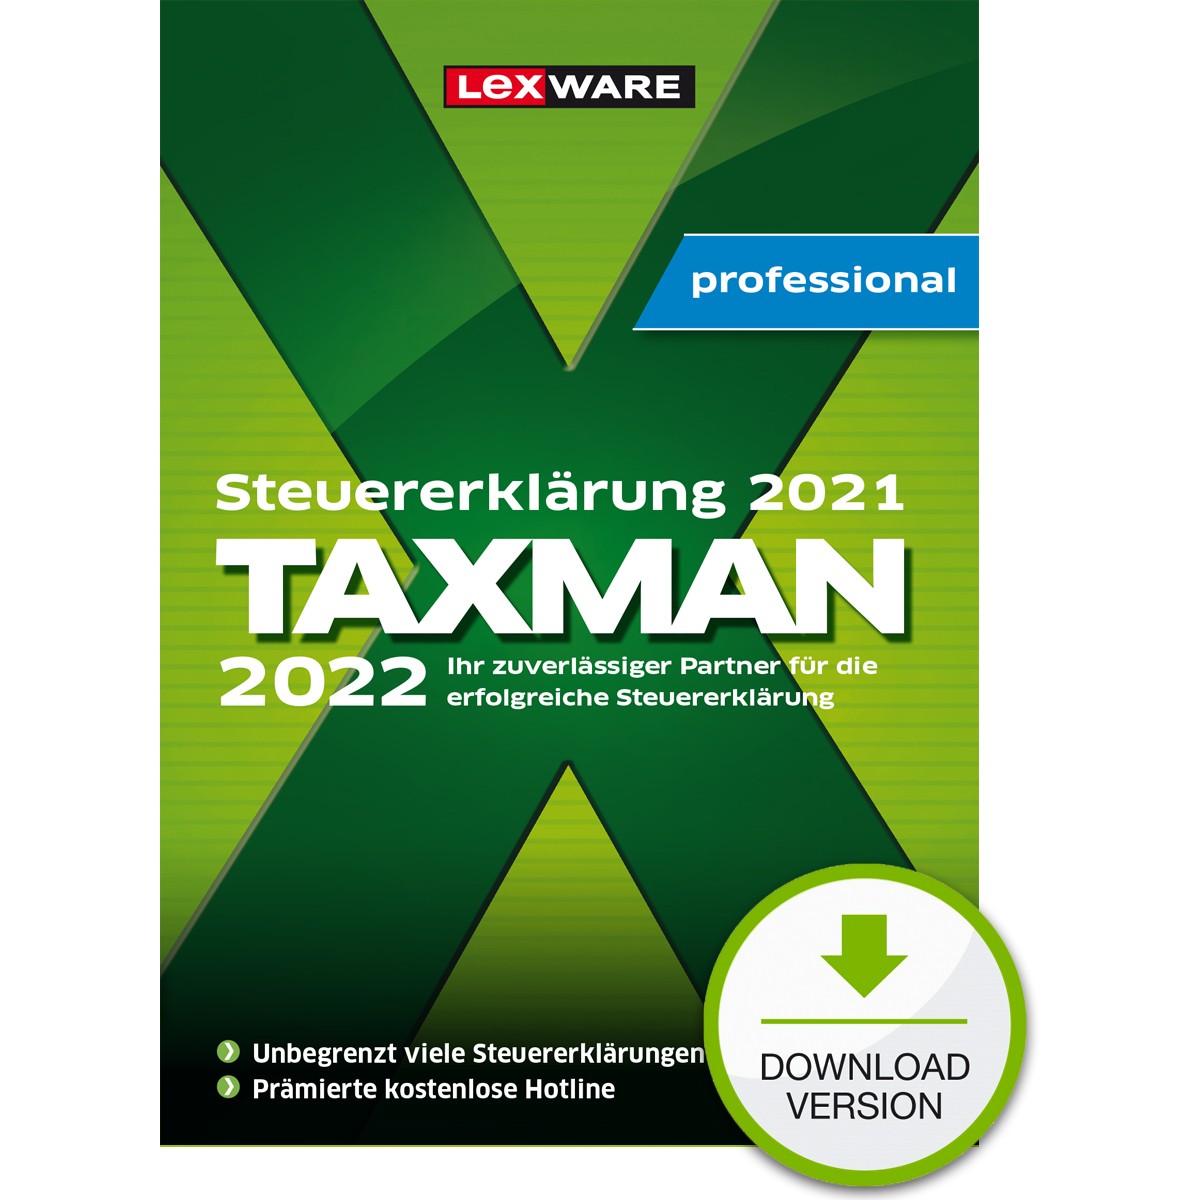 Lexware Taxman professional 2022 - 1 Device. ESD-DownloadESD - 18832-2005